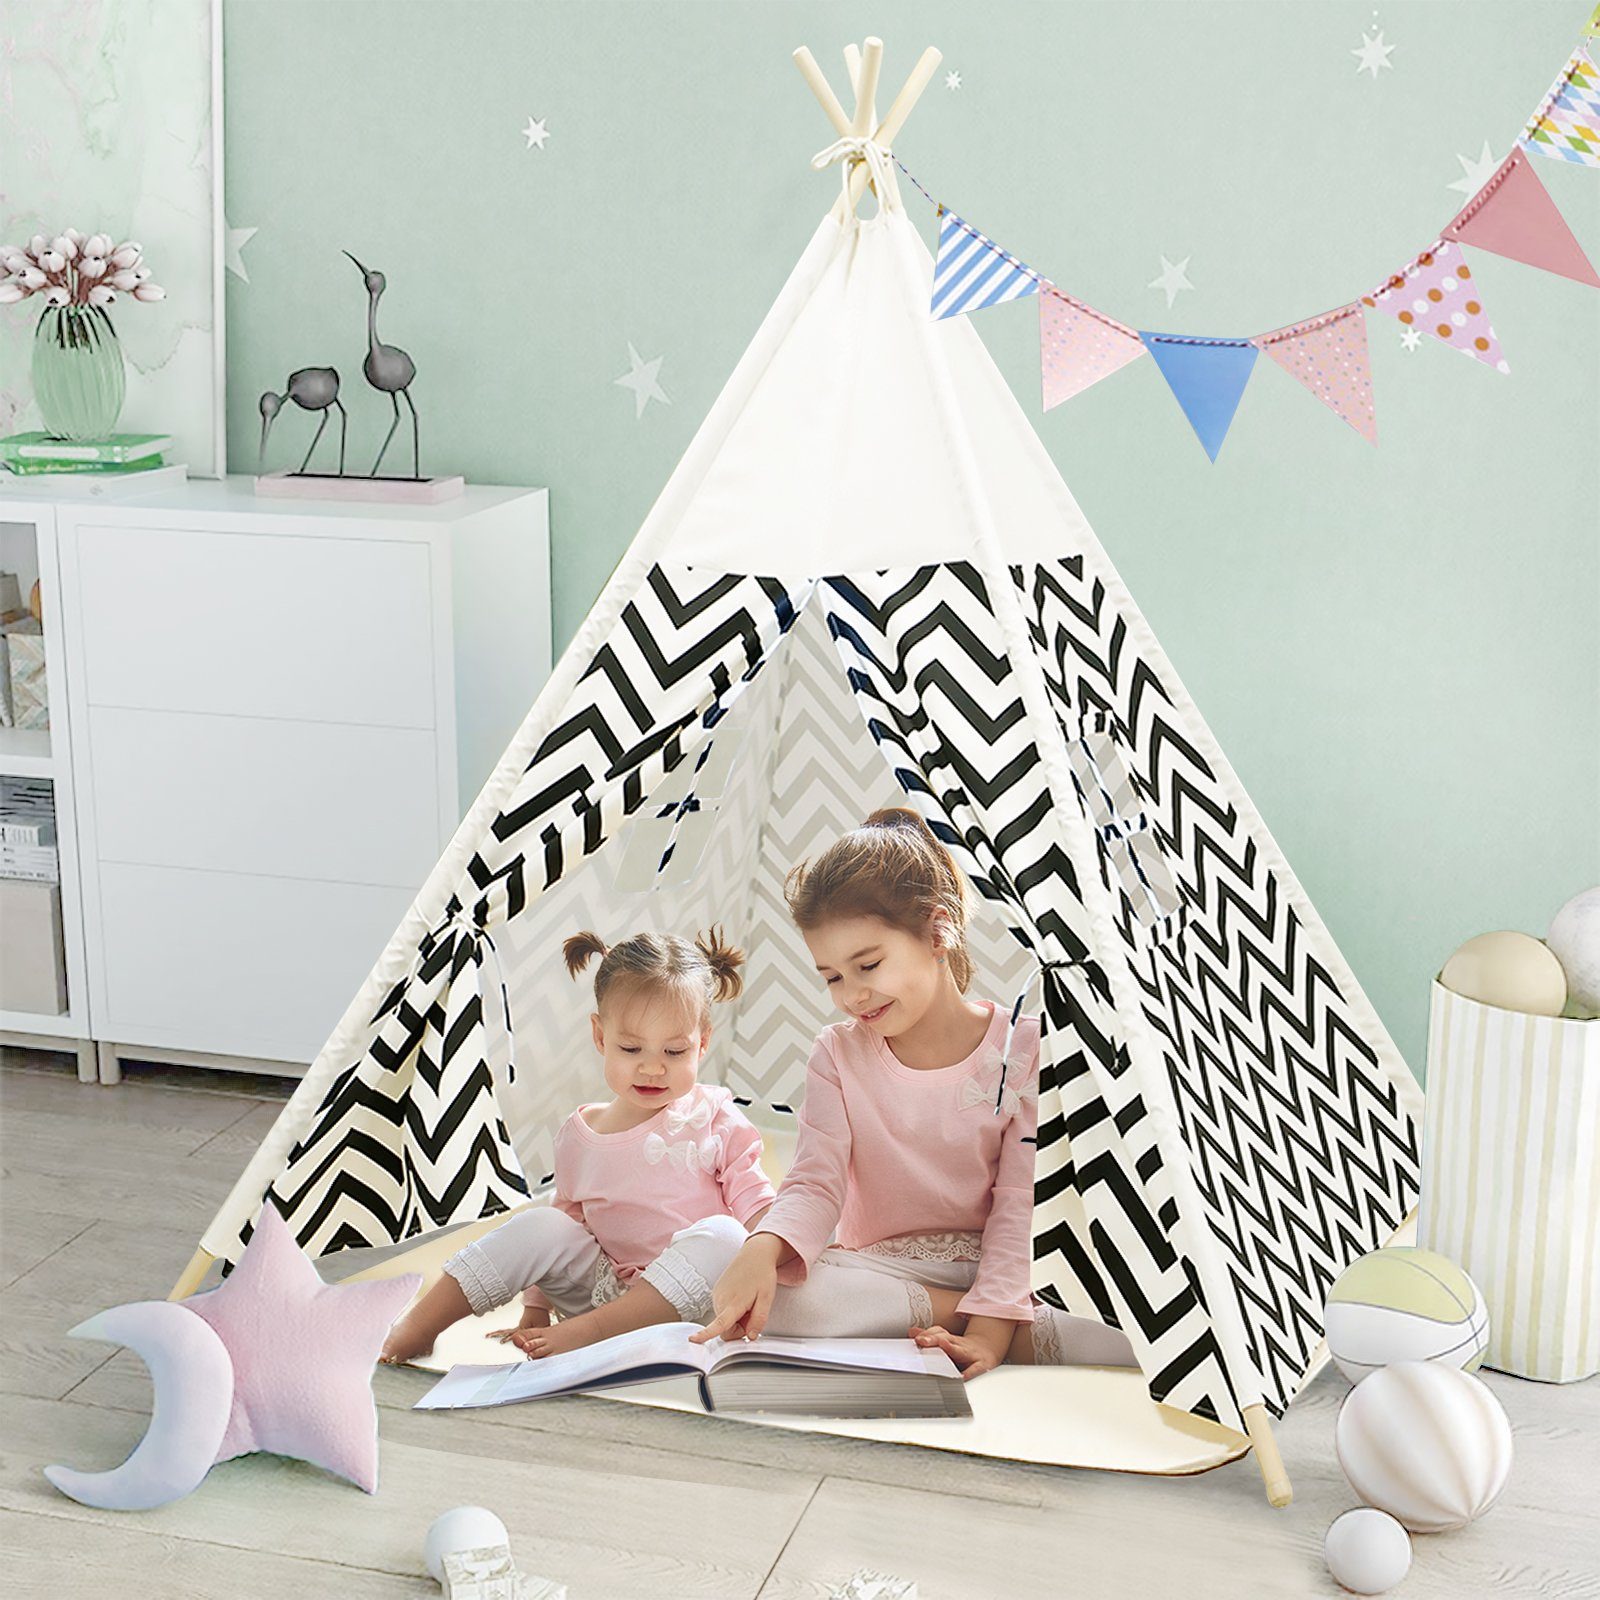 TIPI Zelt Spielzelt Kinderzelt Spielhaus Kinderzimmer aus robustem CANVAS-STOFF 